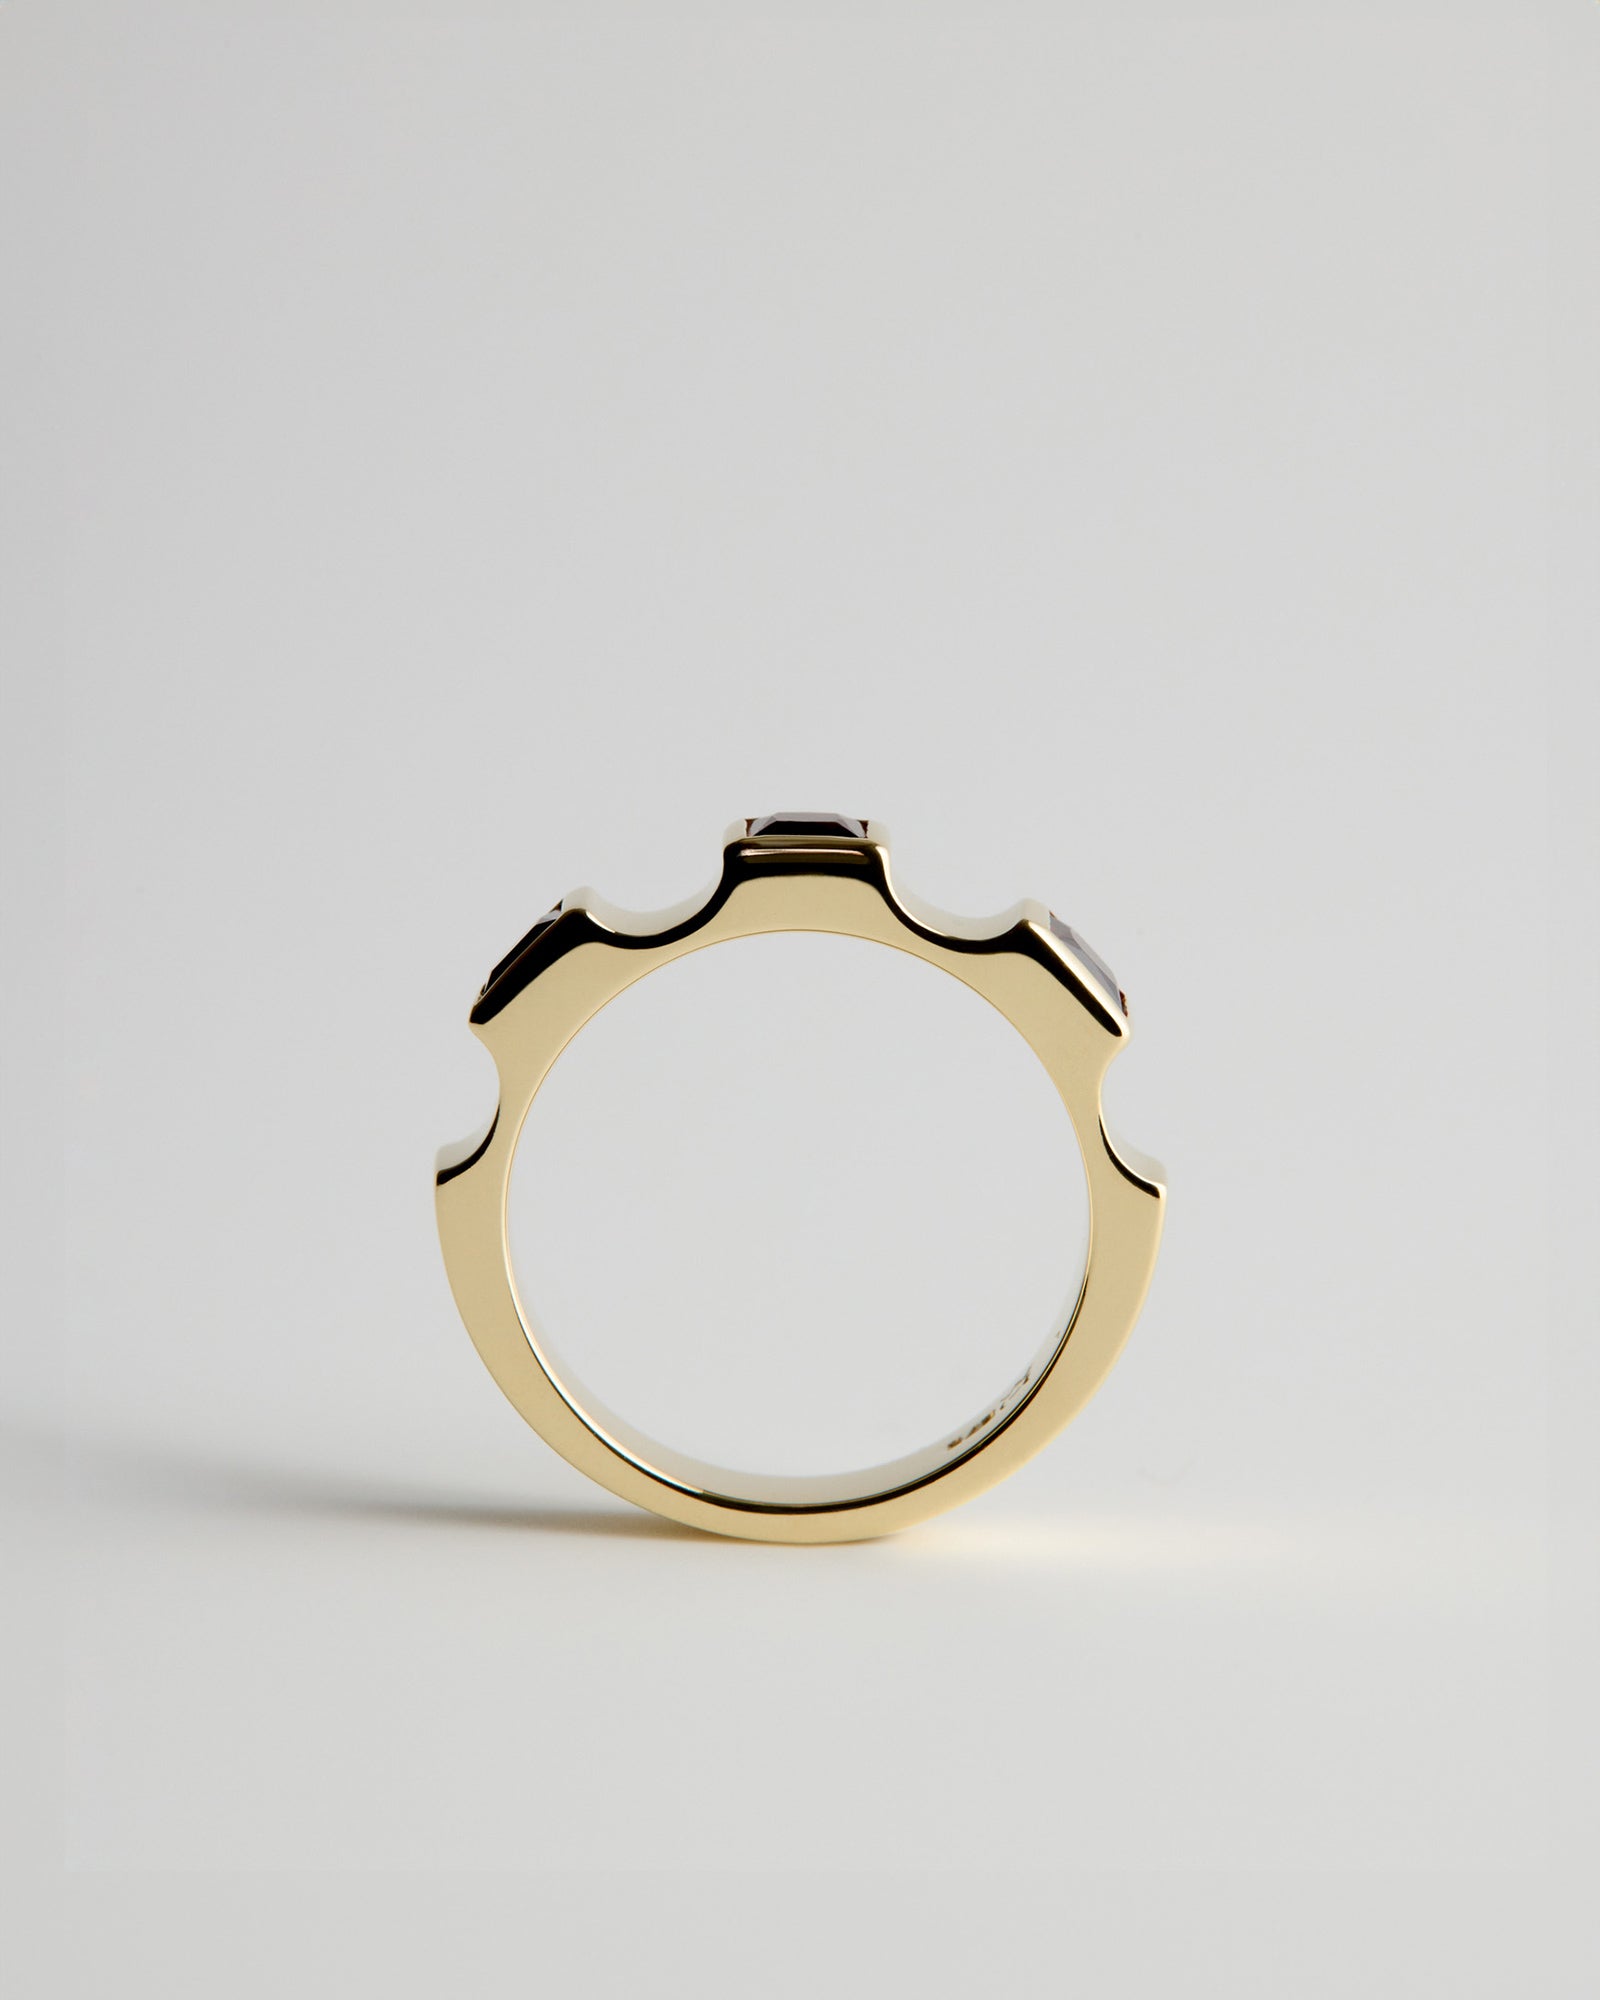 Large Window Ring - Almandine Garnets